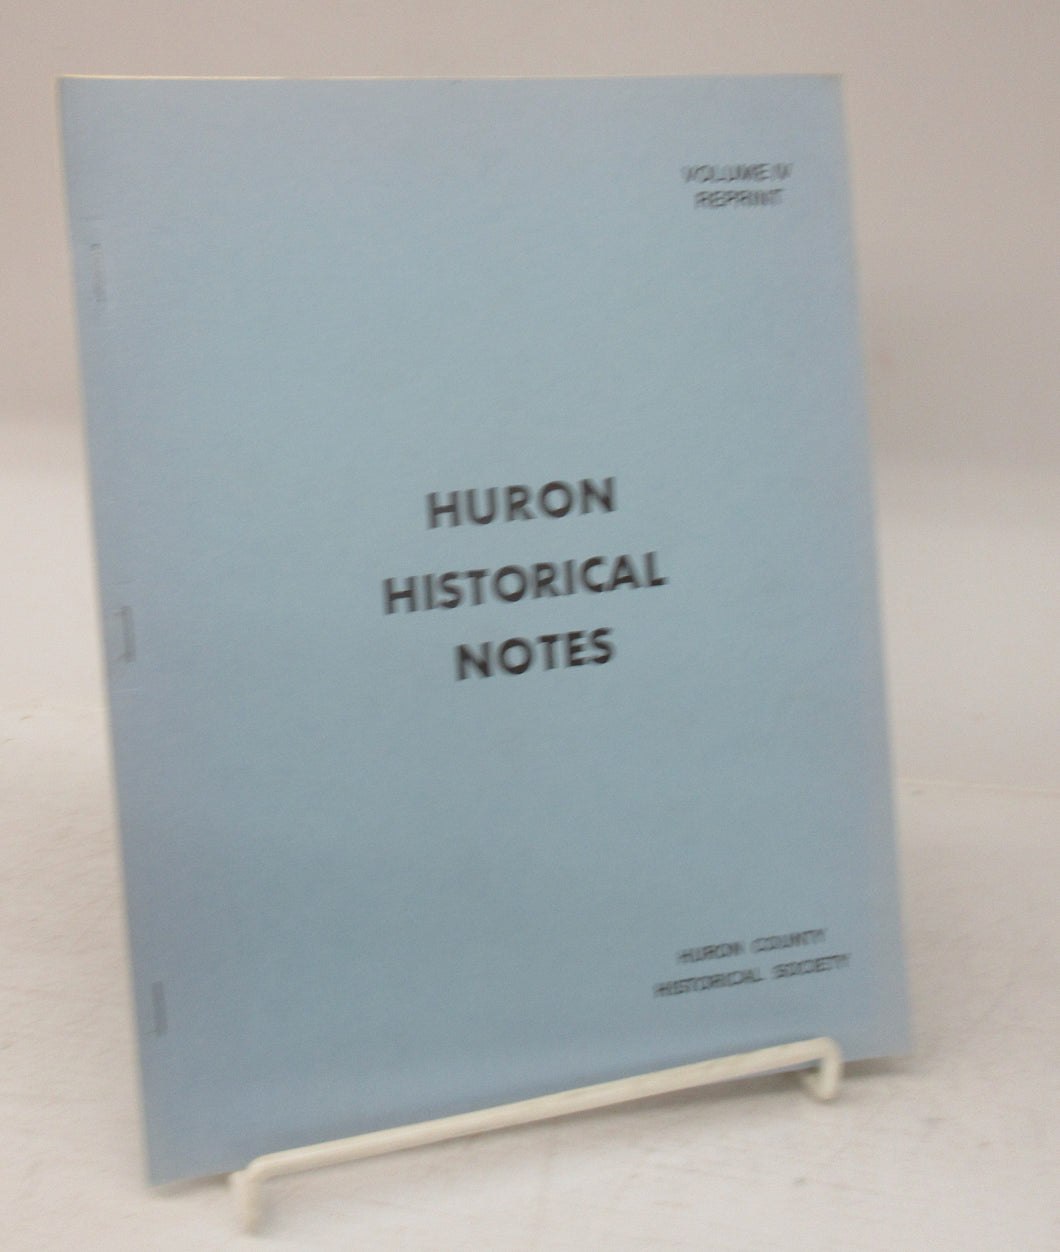 Huron Historical Notes, Volume IV reprint